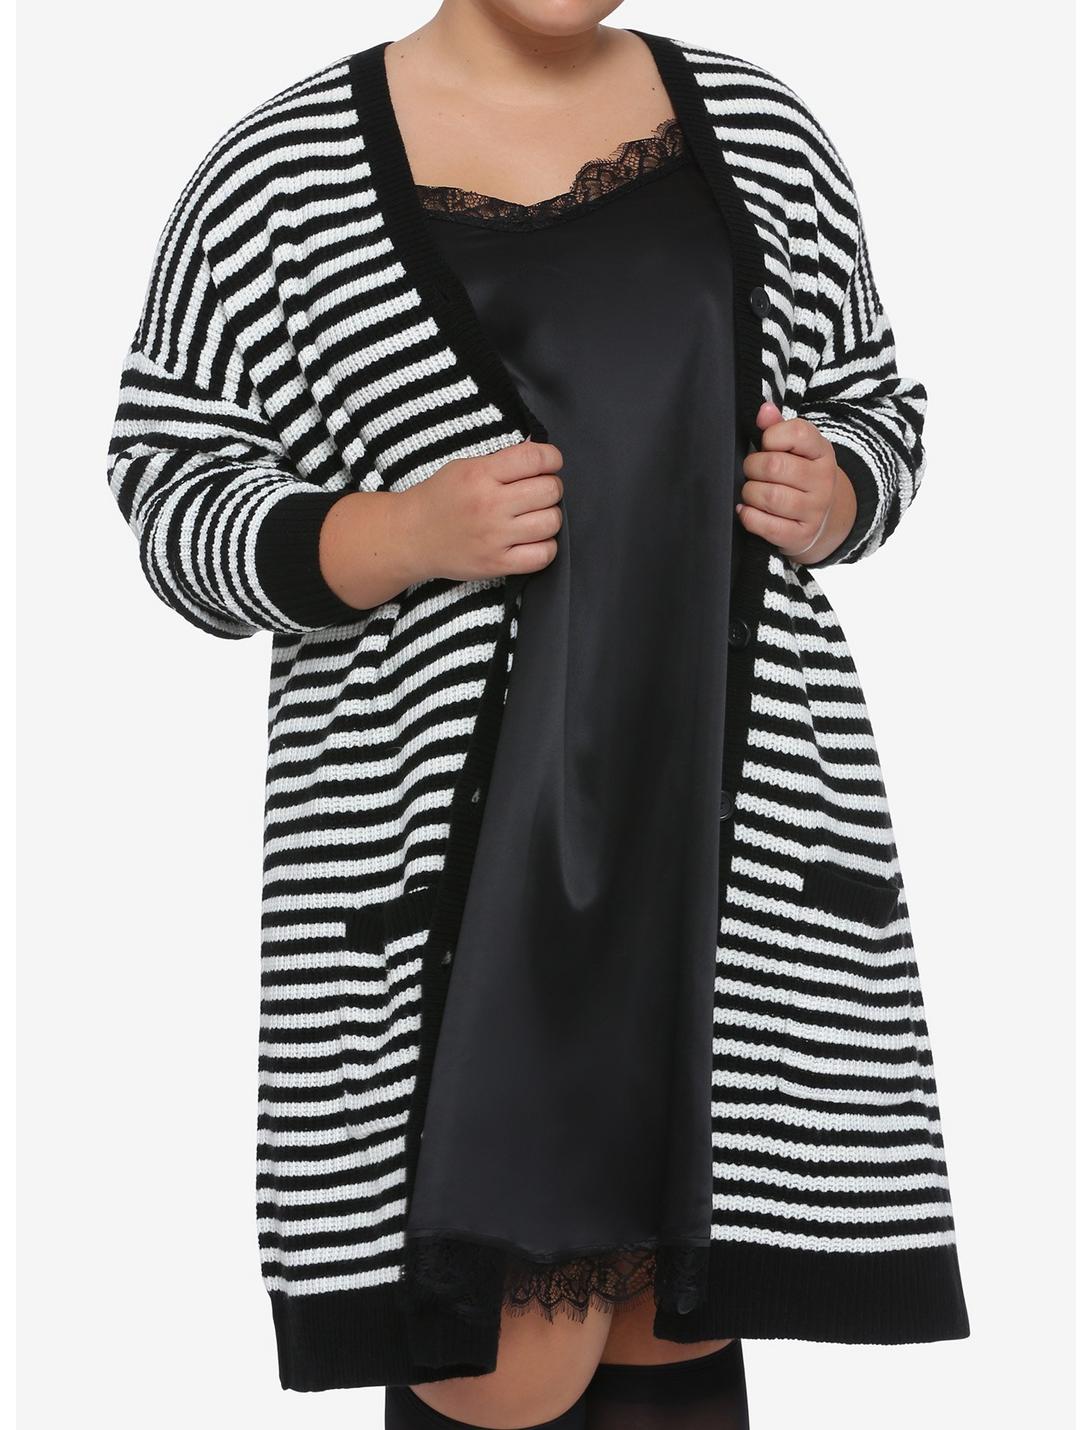 Black & White Stripe Girls Cardigan Plus Size, STRIPE WHITE AND BLACK, hi-res